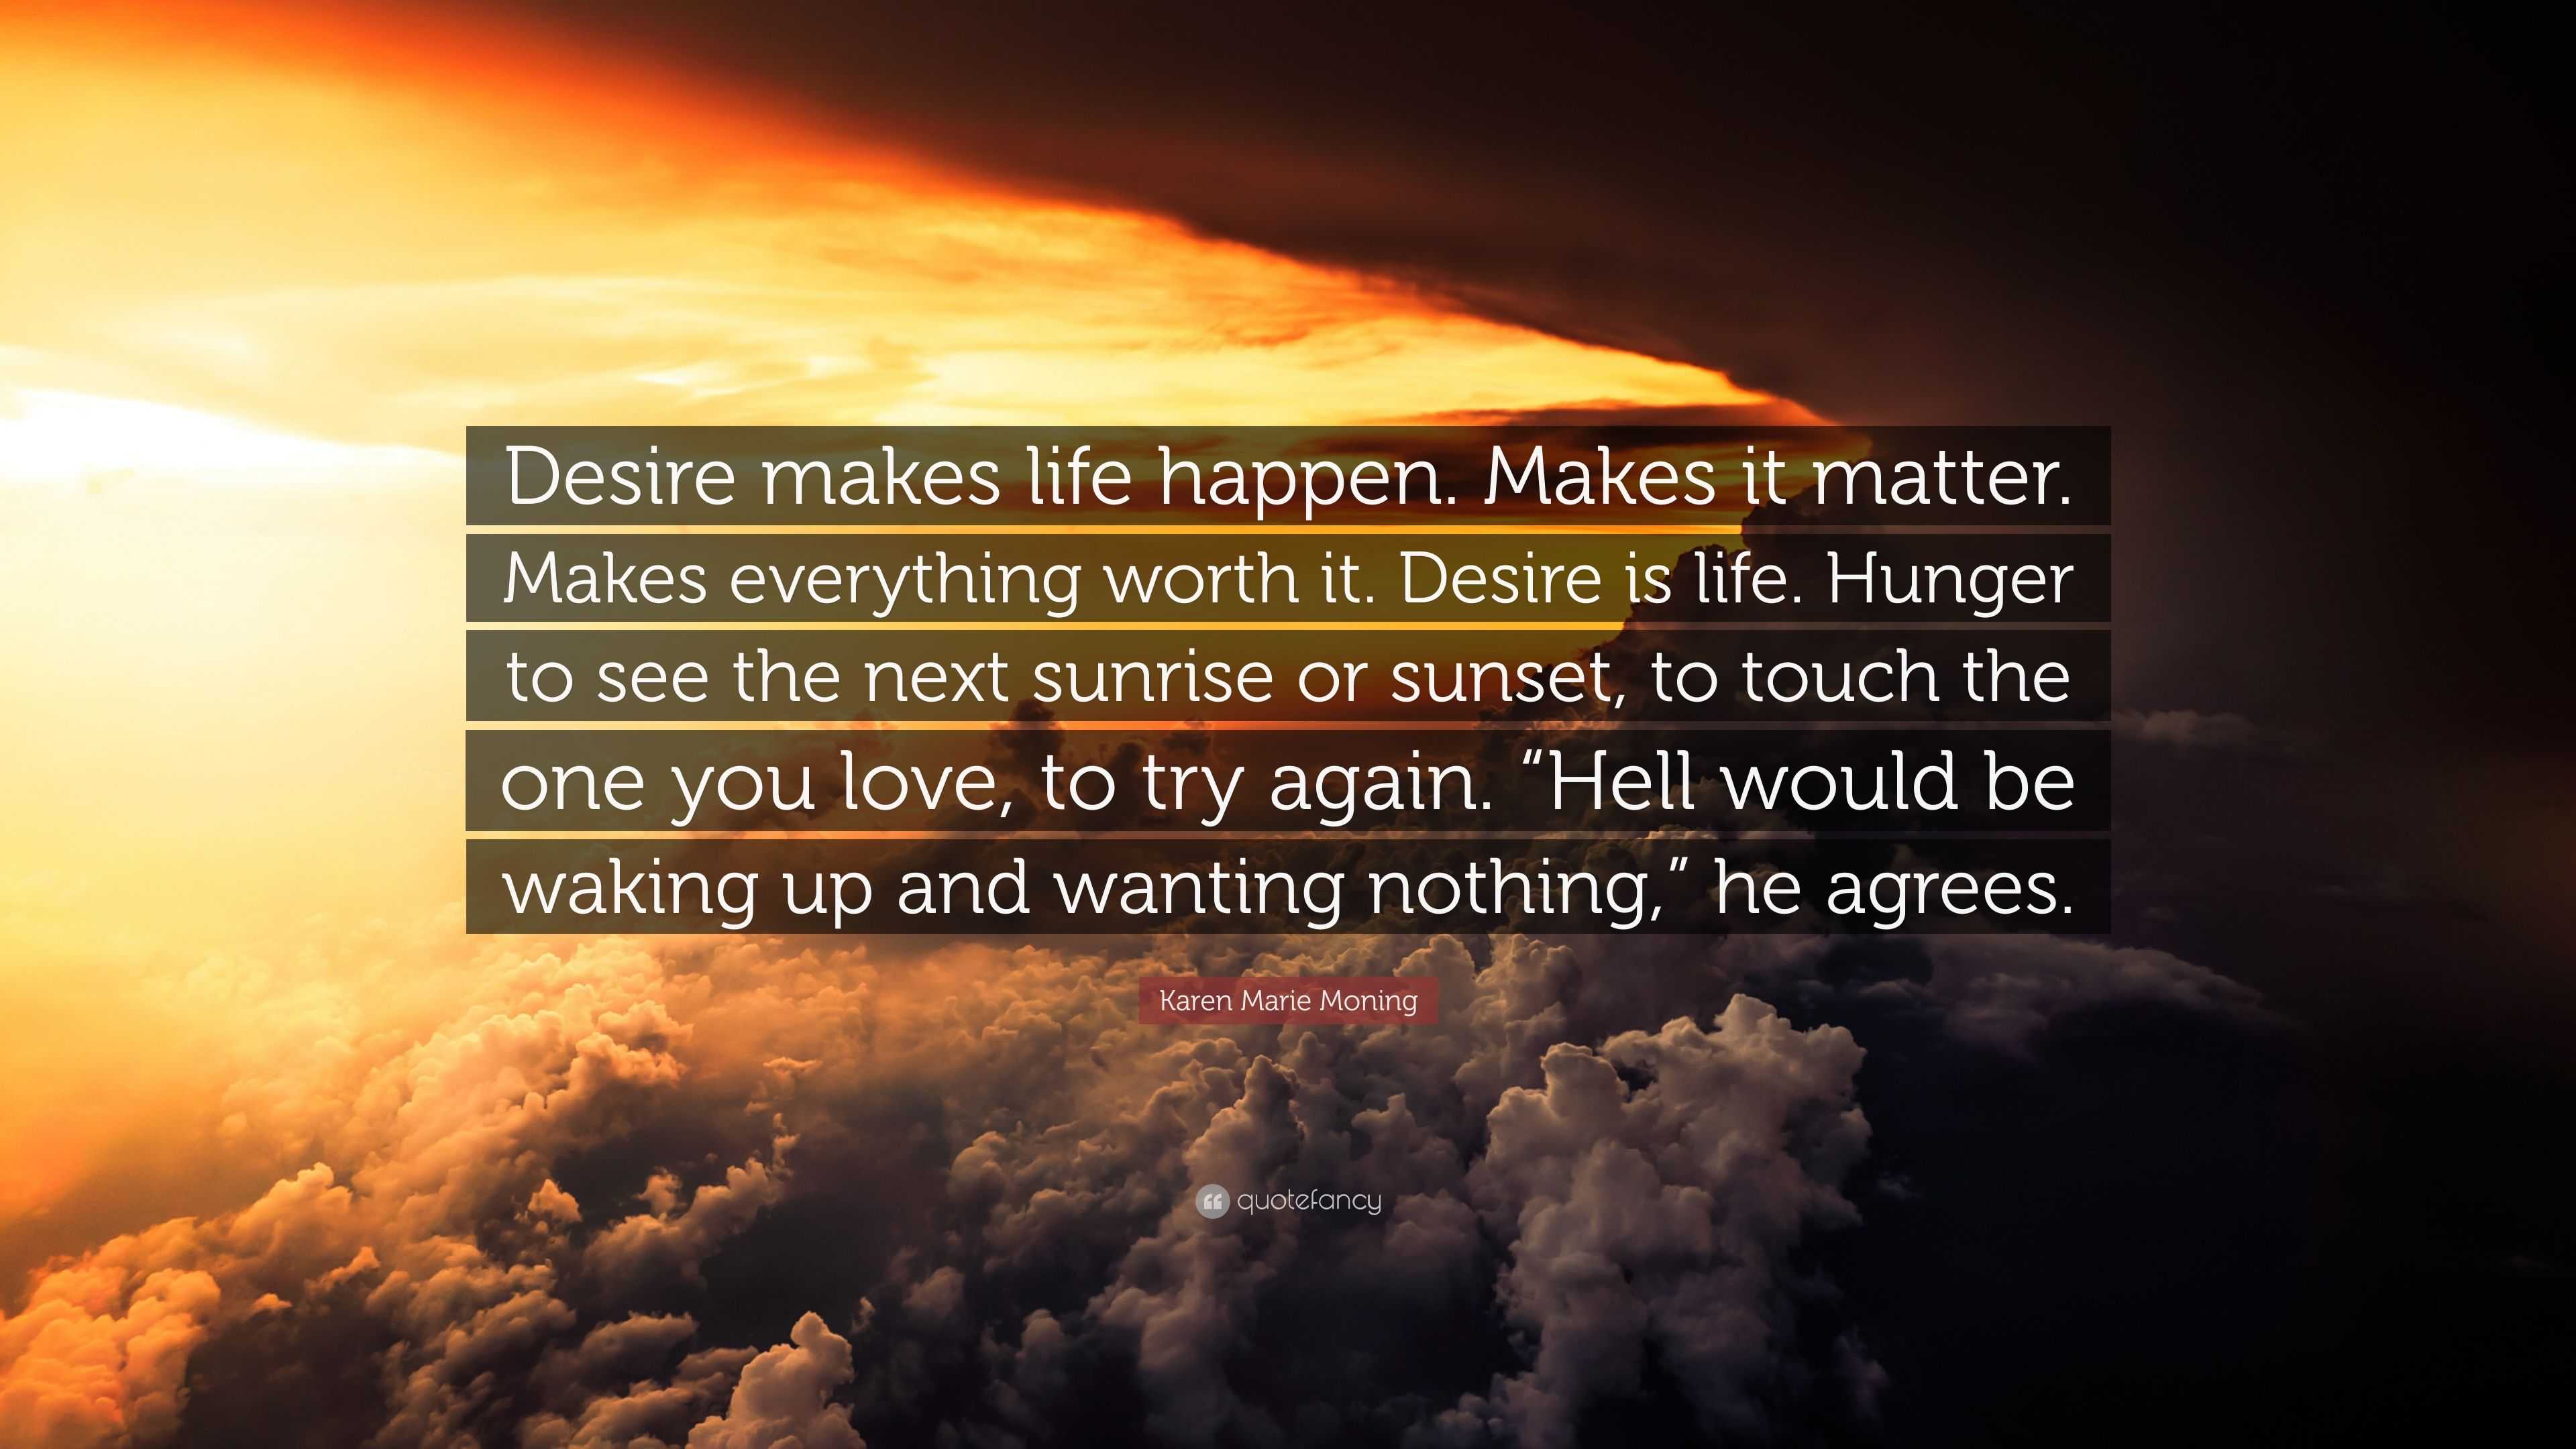 Karen Marie Moning Quote “Desire makes life happen Makes it matter Makes